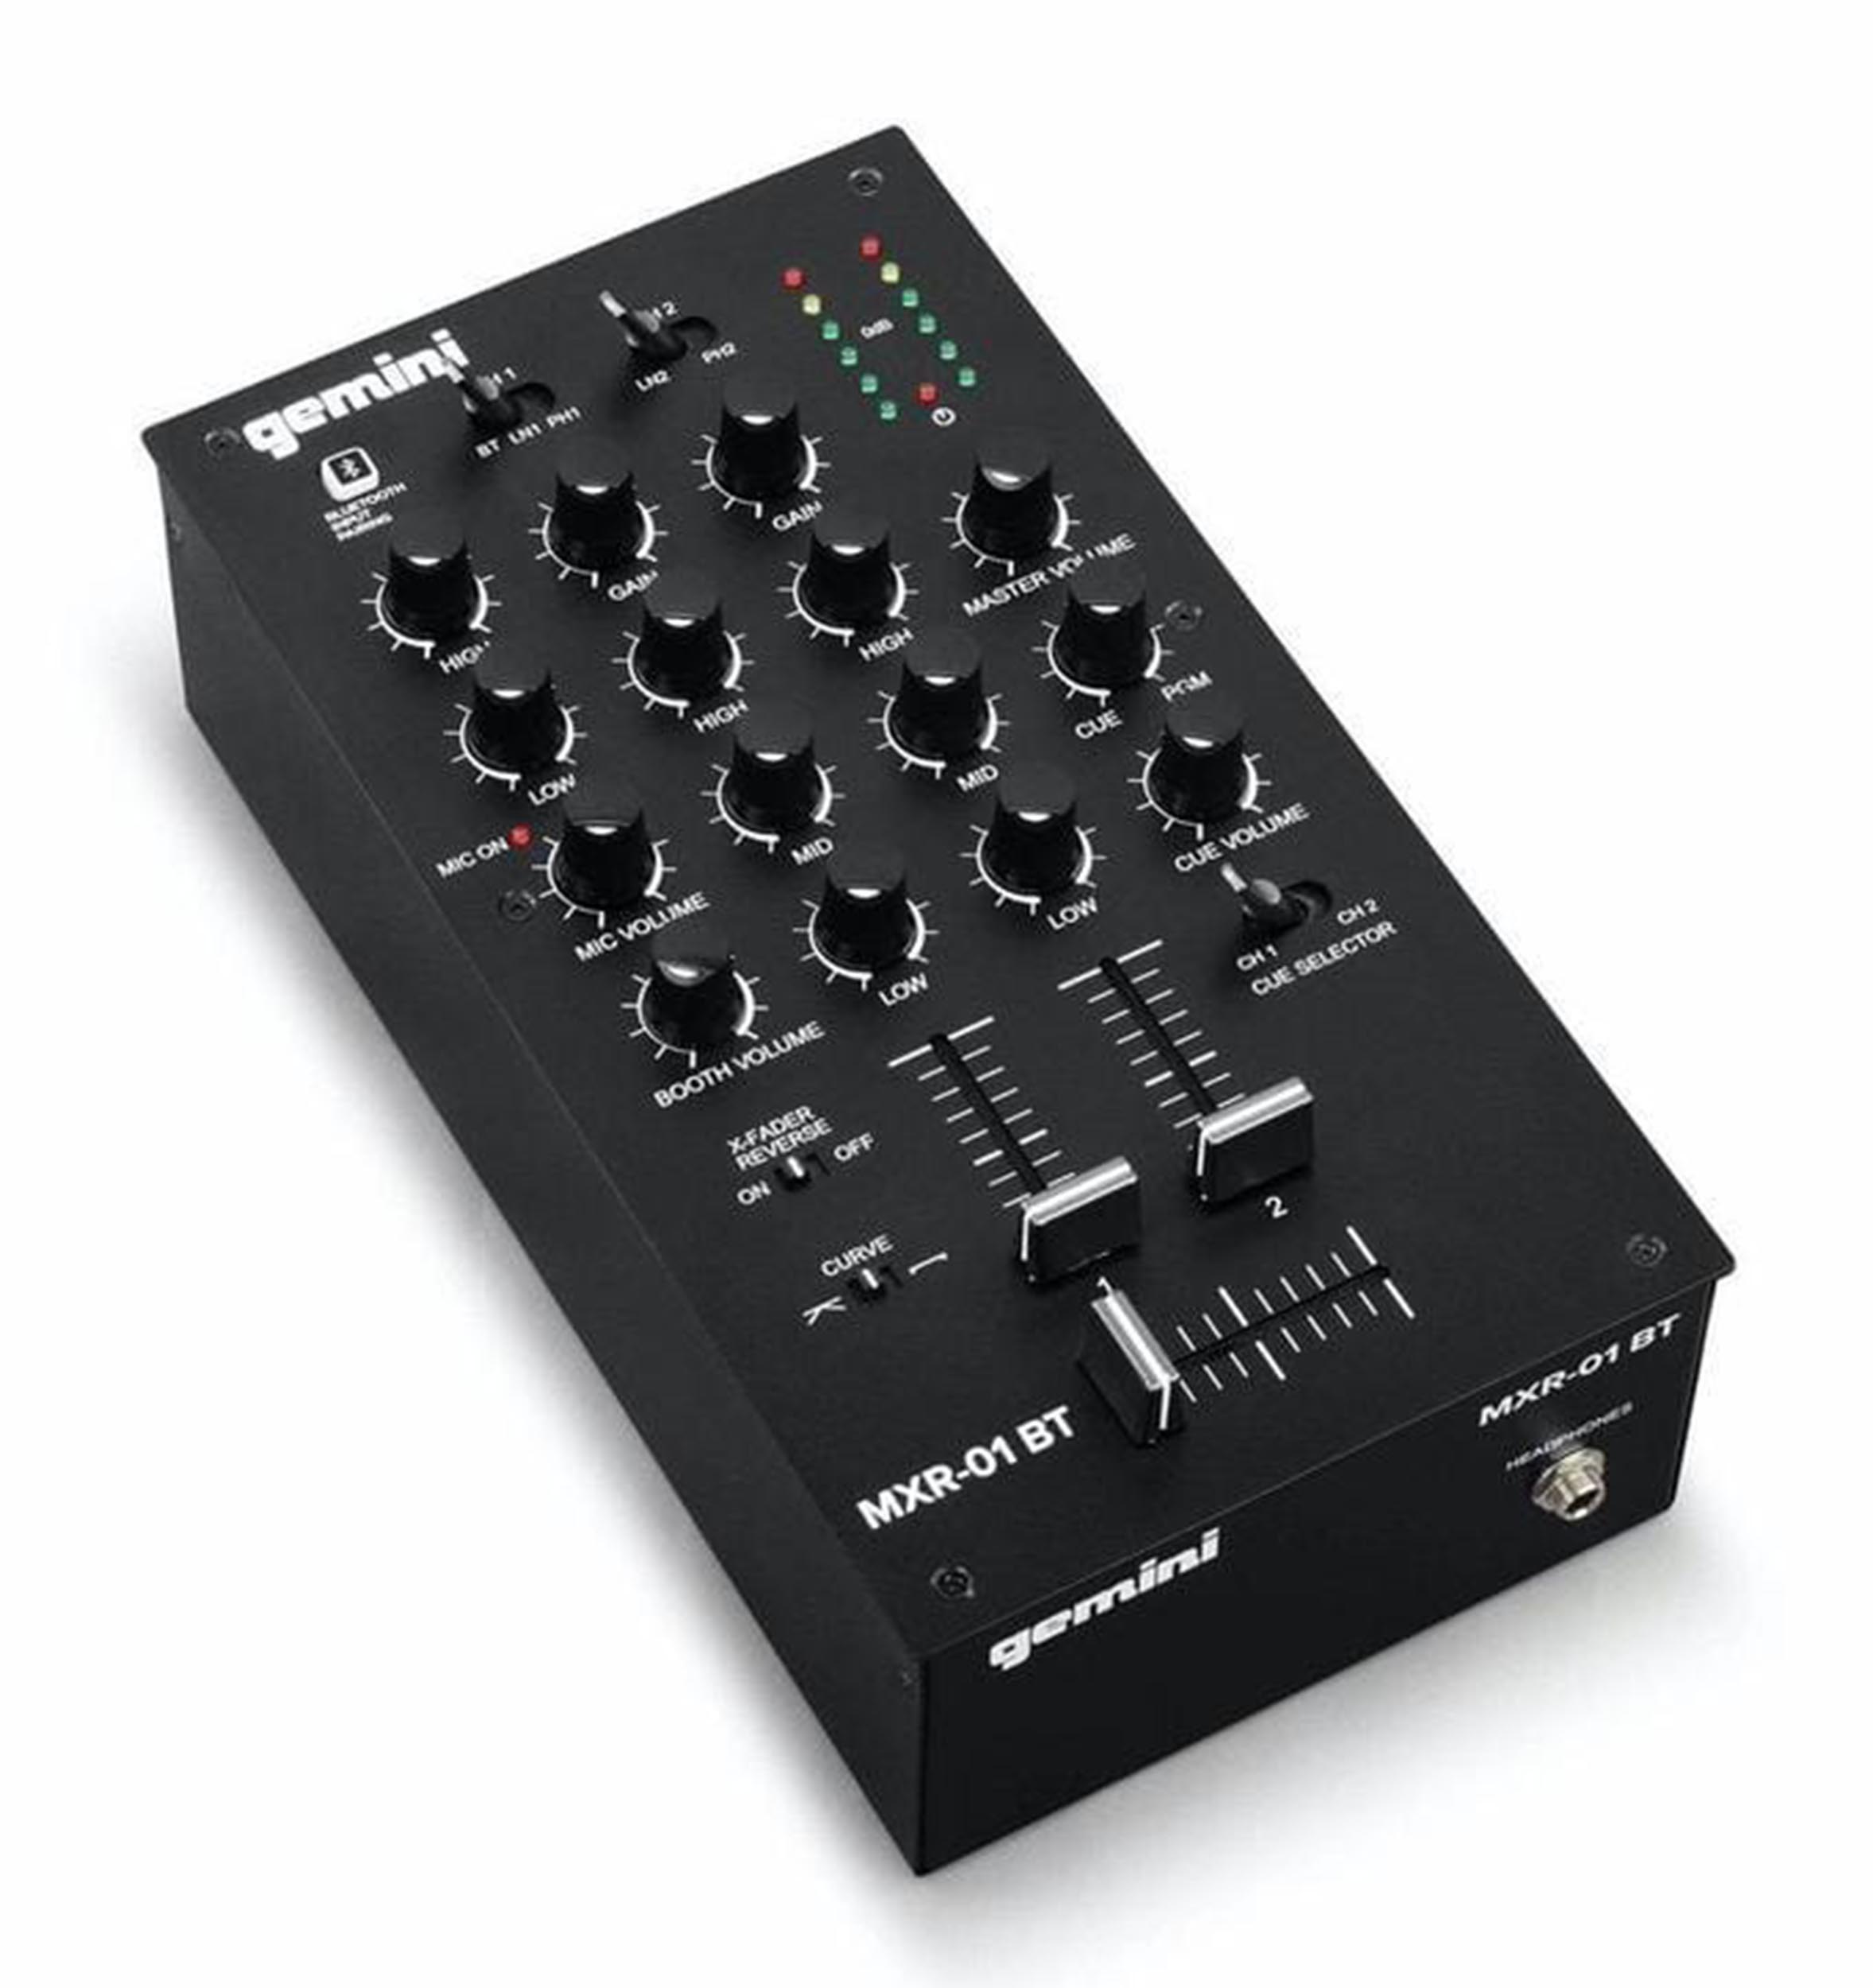 Gemini Sound MXR-01BT, 2-Channel Professional Dj Mixer with Bluetooth Input - Hollywood DJ